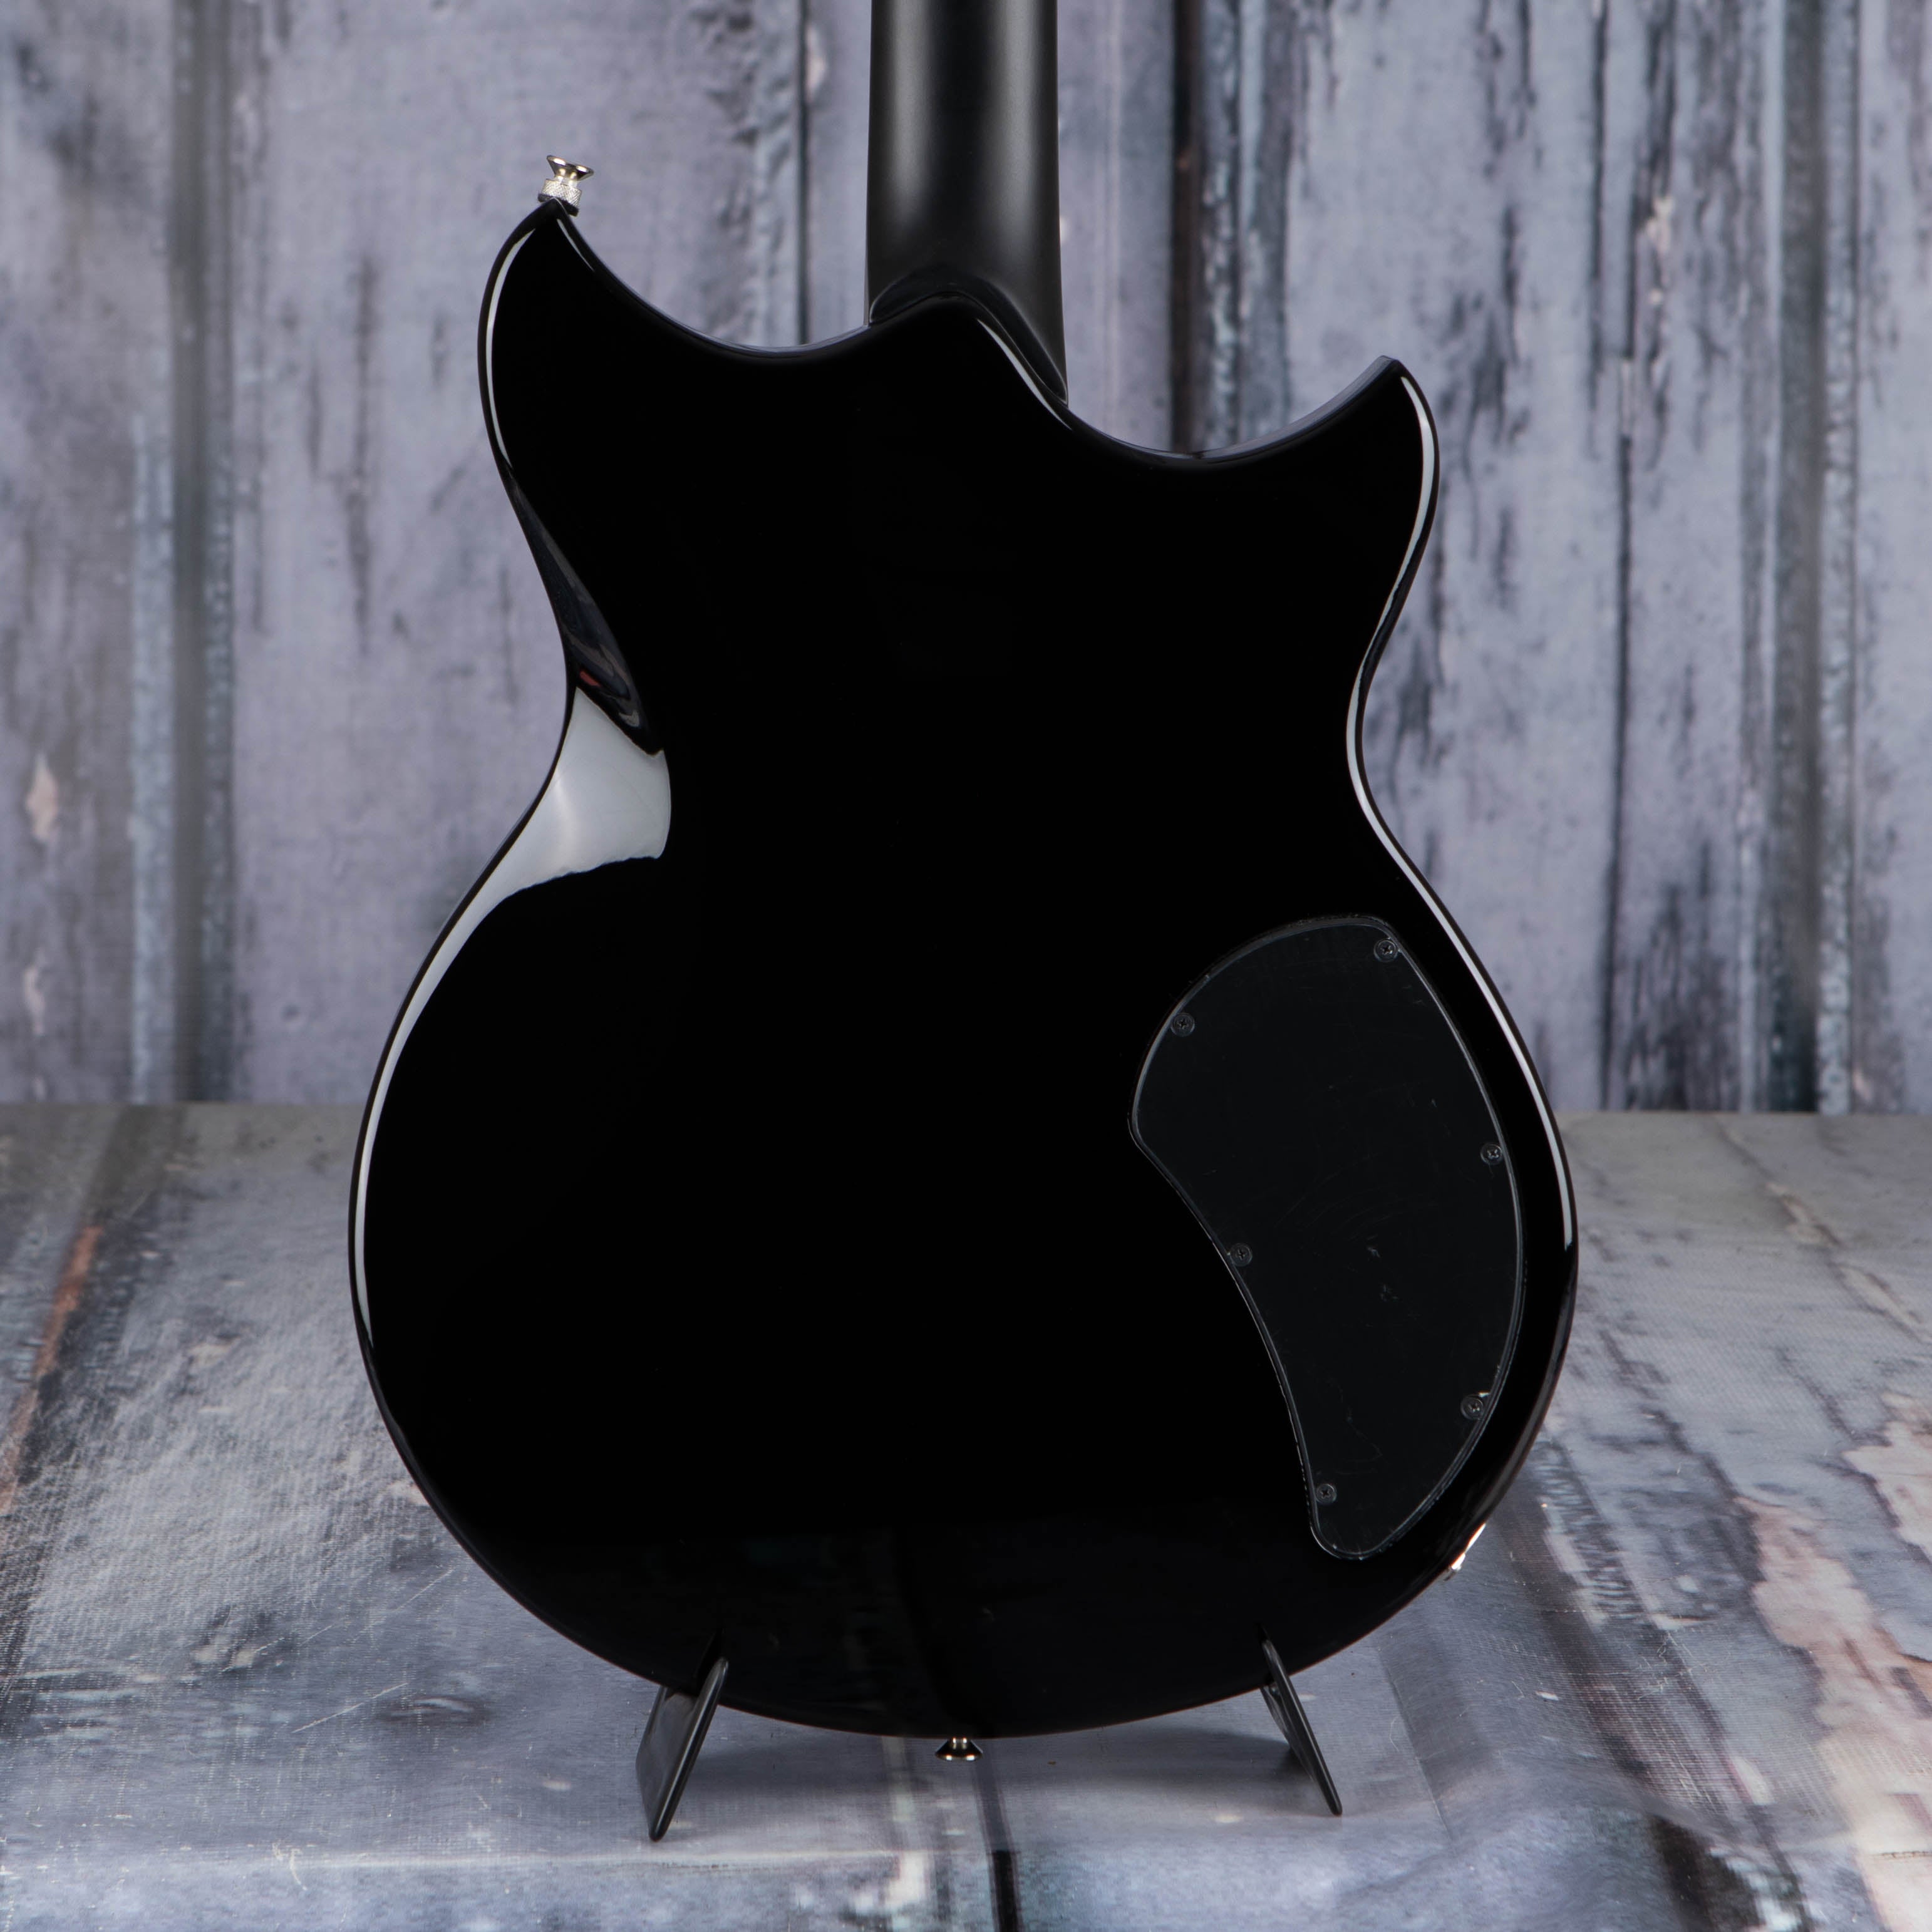 Yamaha Revstar Element RSE20 Left-Handed Electric Guitar, Black, back closeup